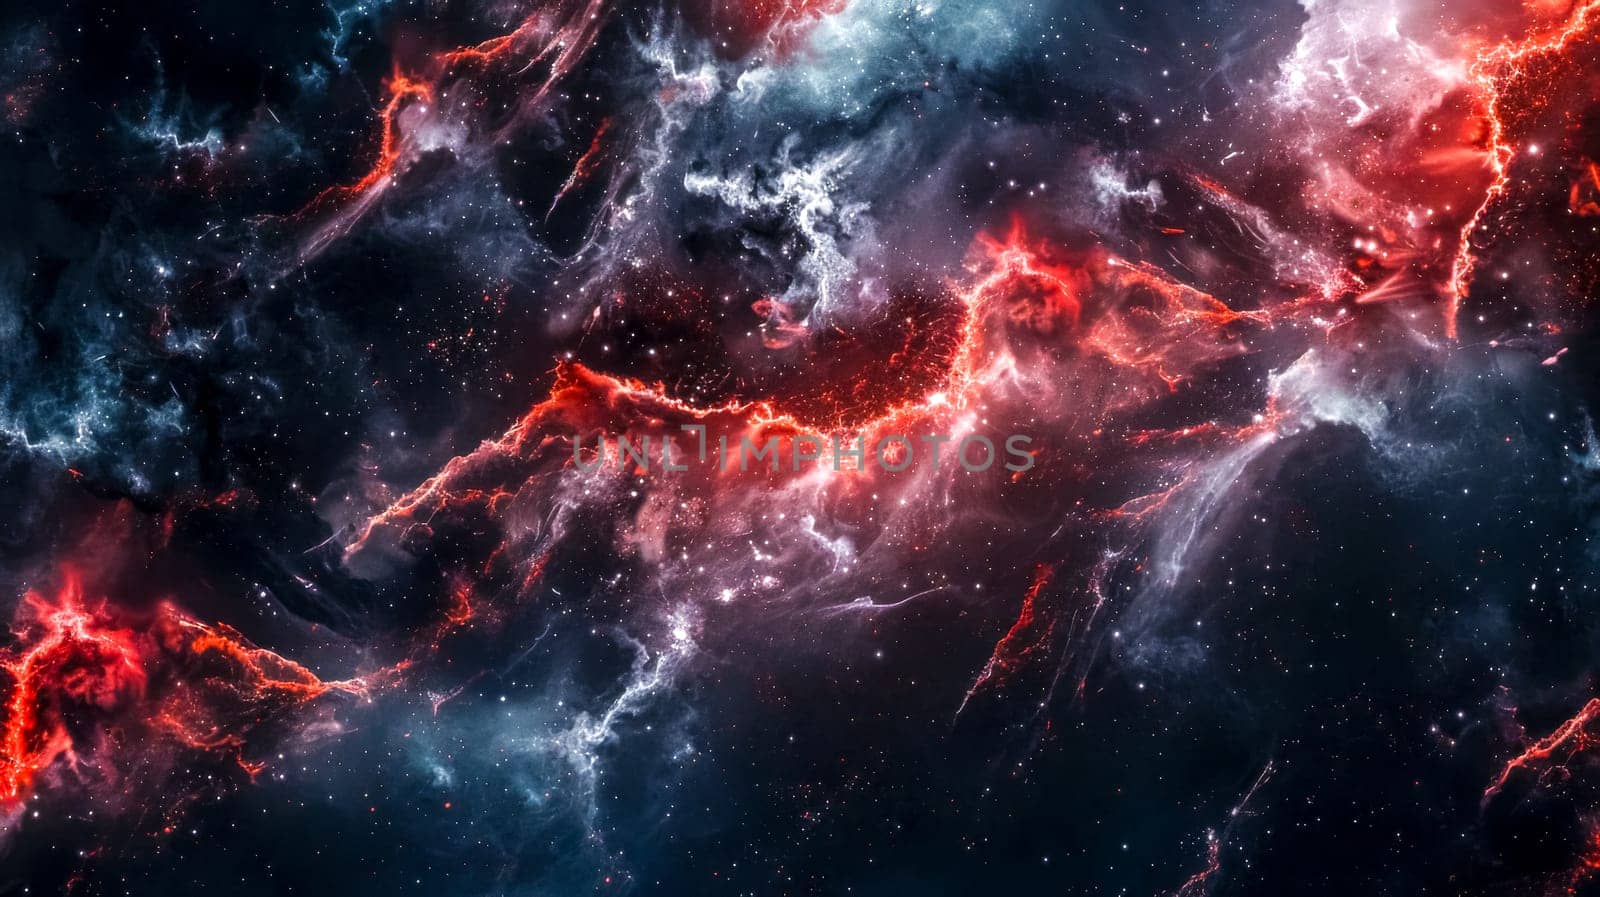 Cosmic inferno: vibrant nebula wallpaper by Edophoto